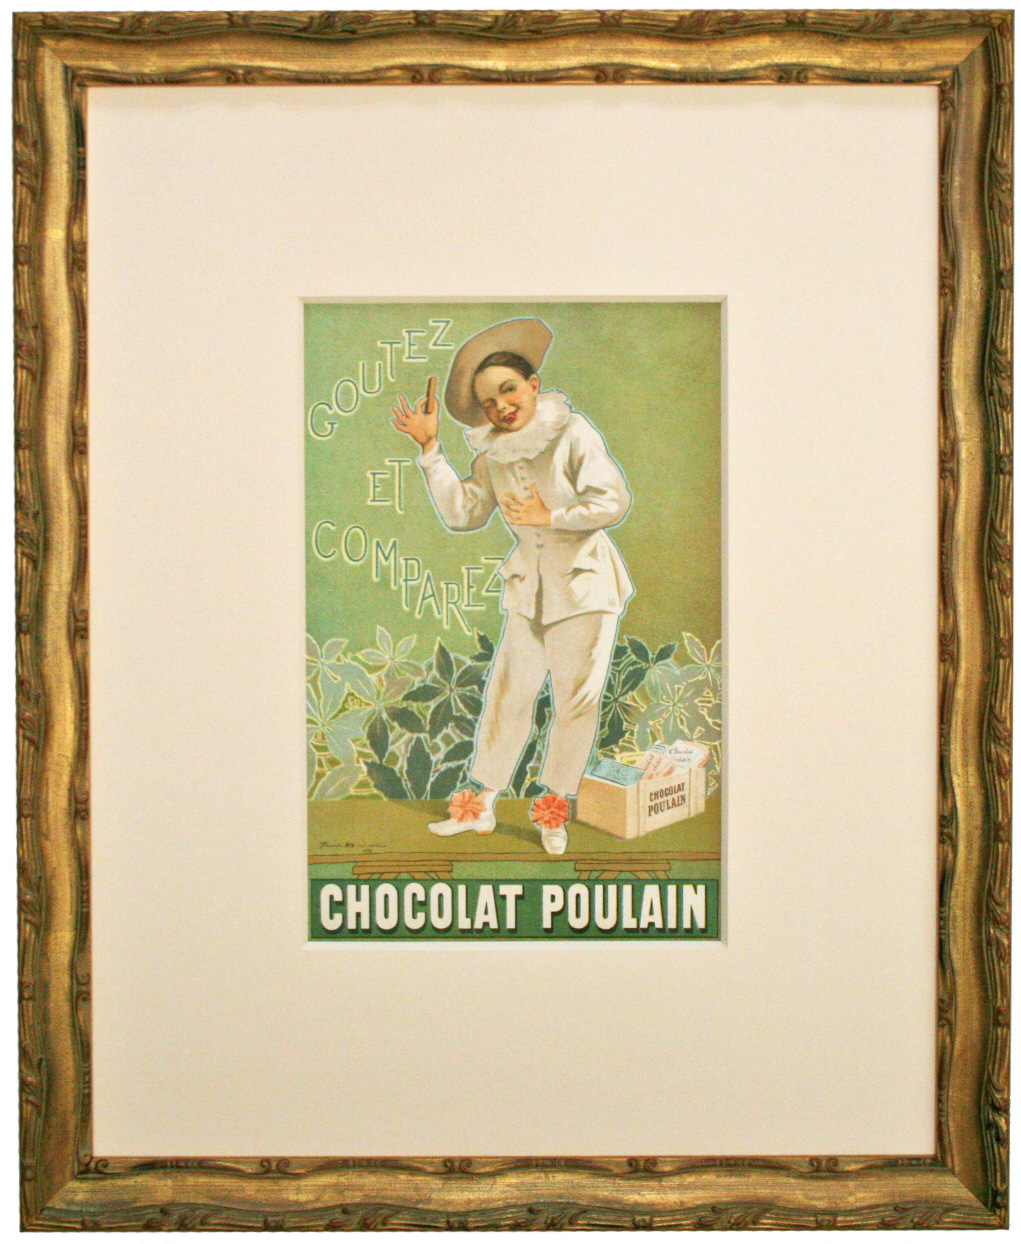 Chocolat Poulain